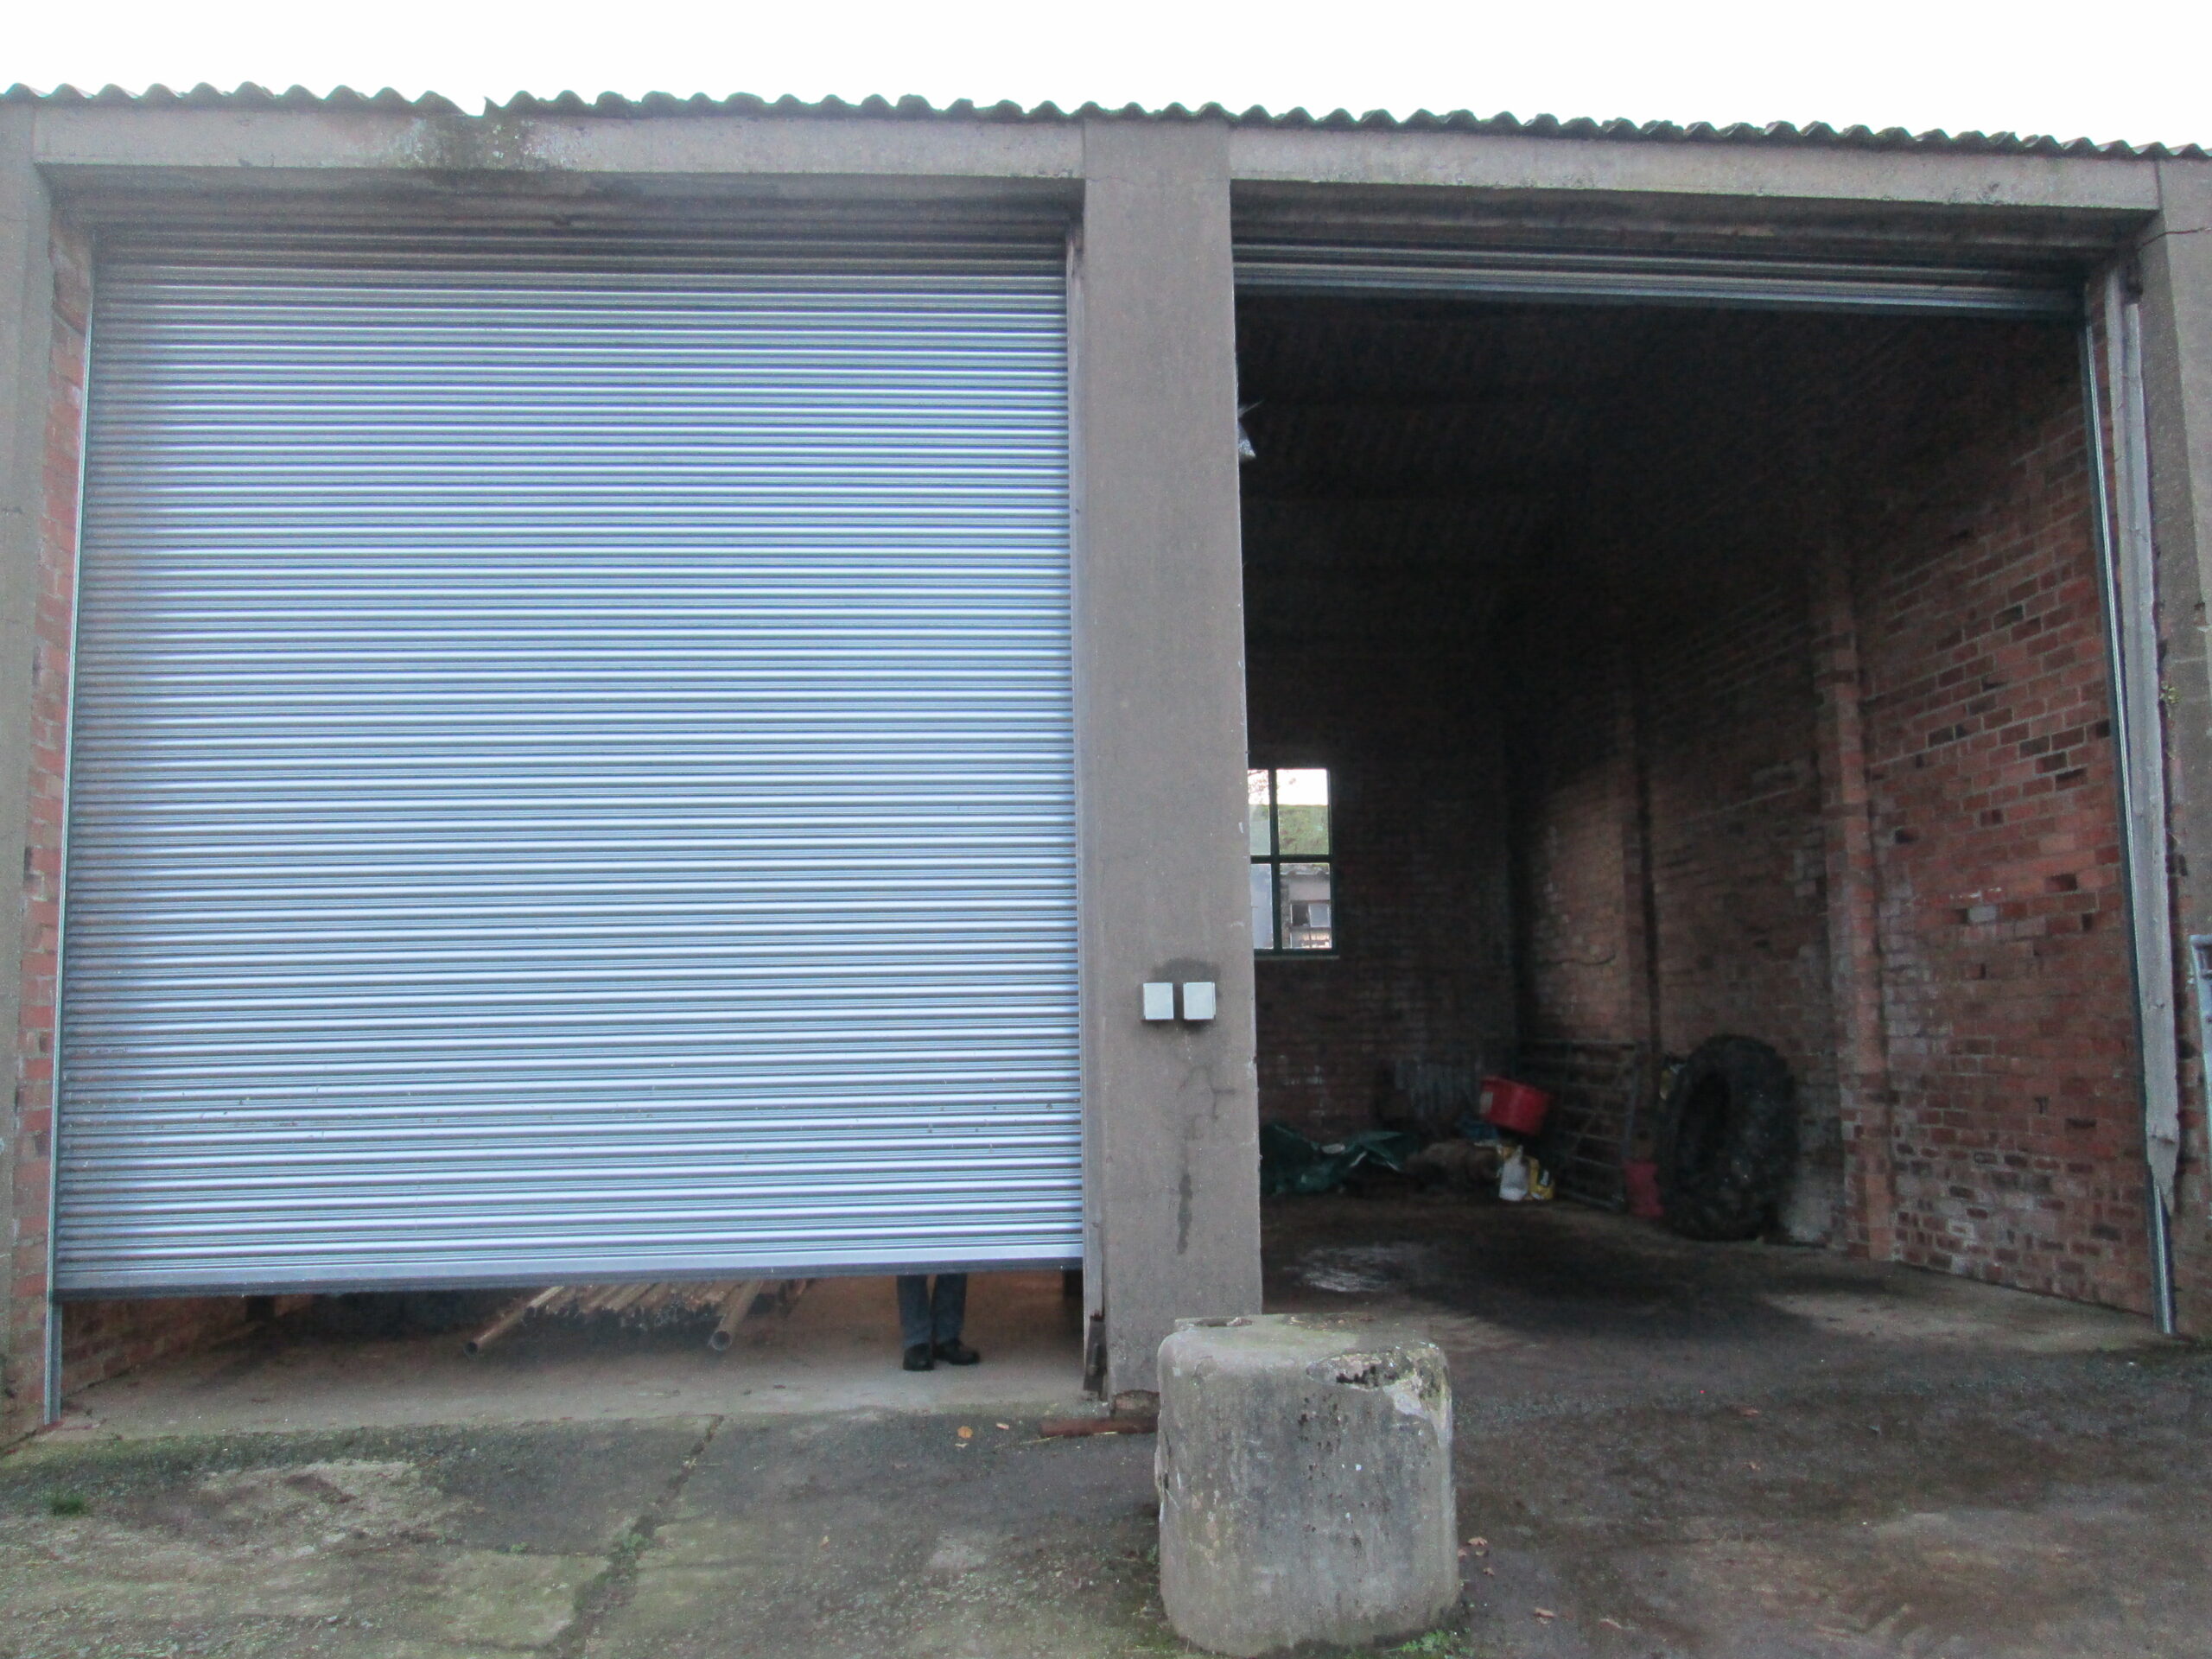 Storage Units to Let near Condover, Shrewsbury, Shropshire